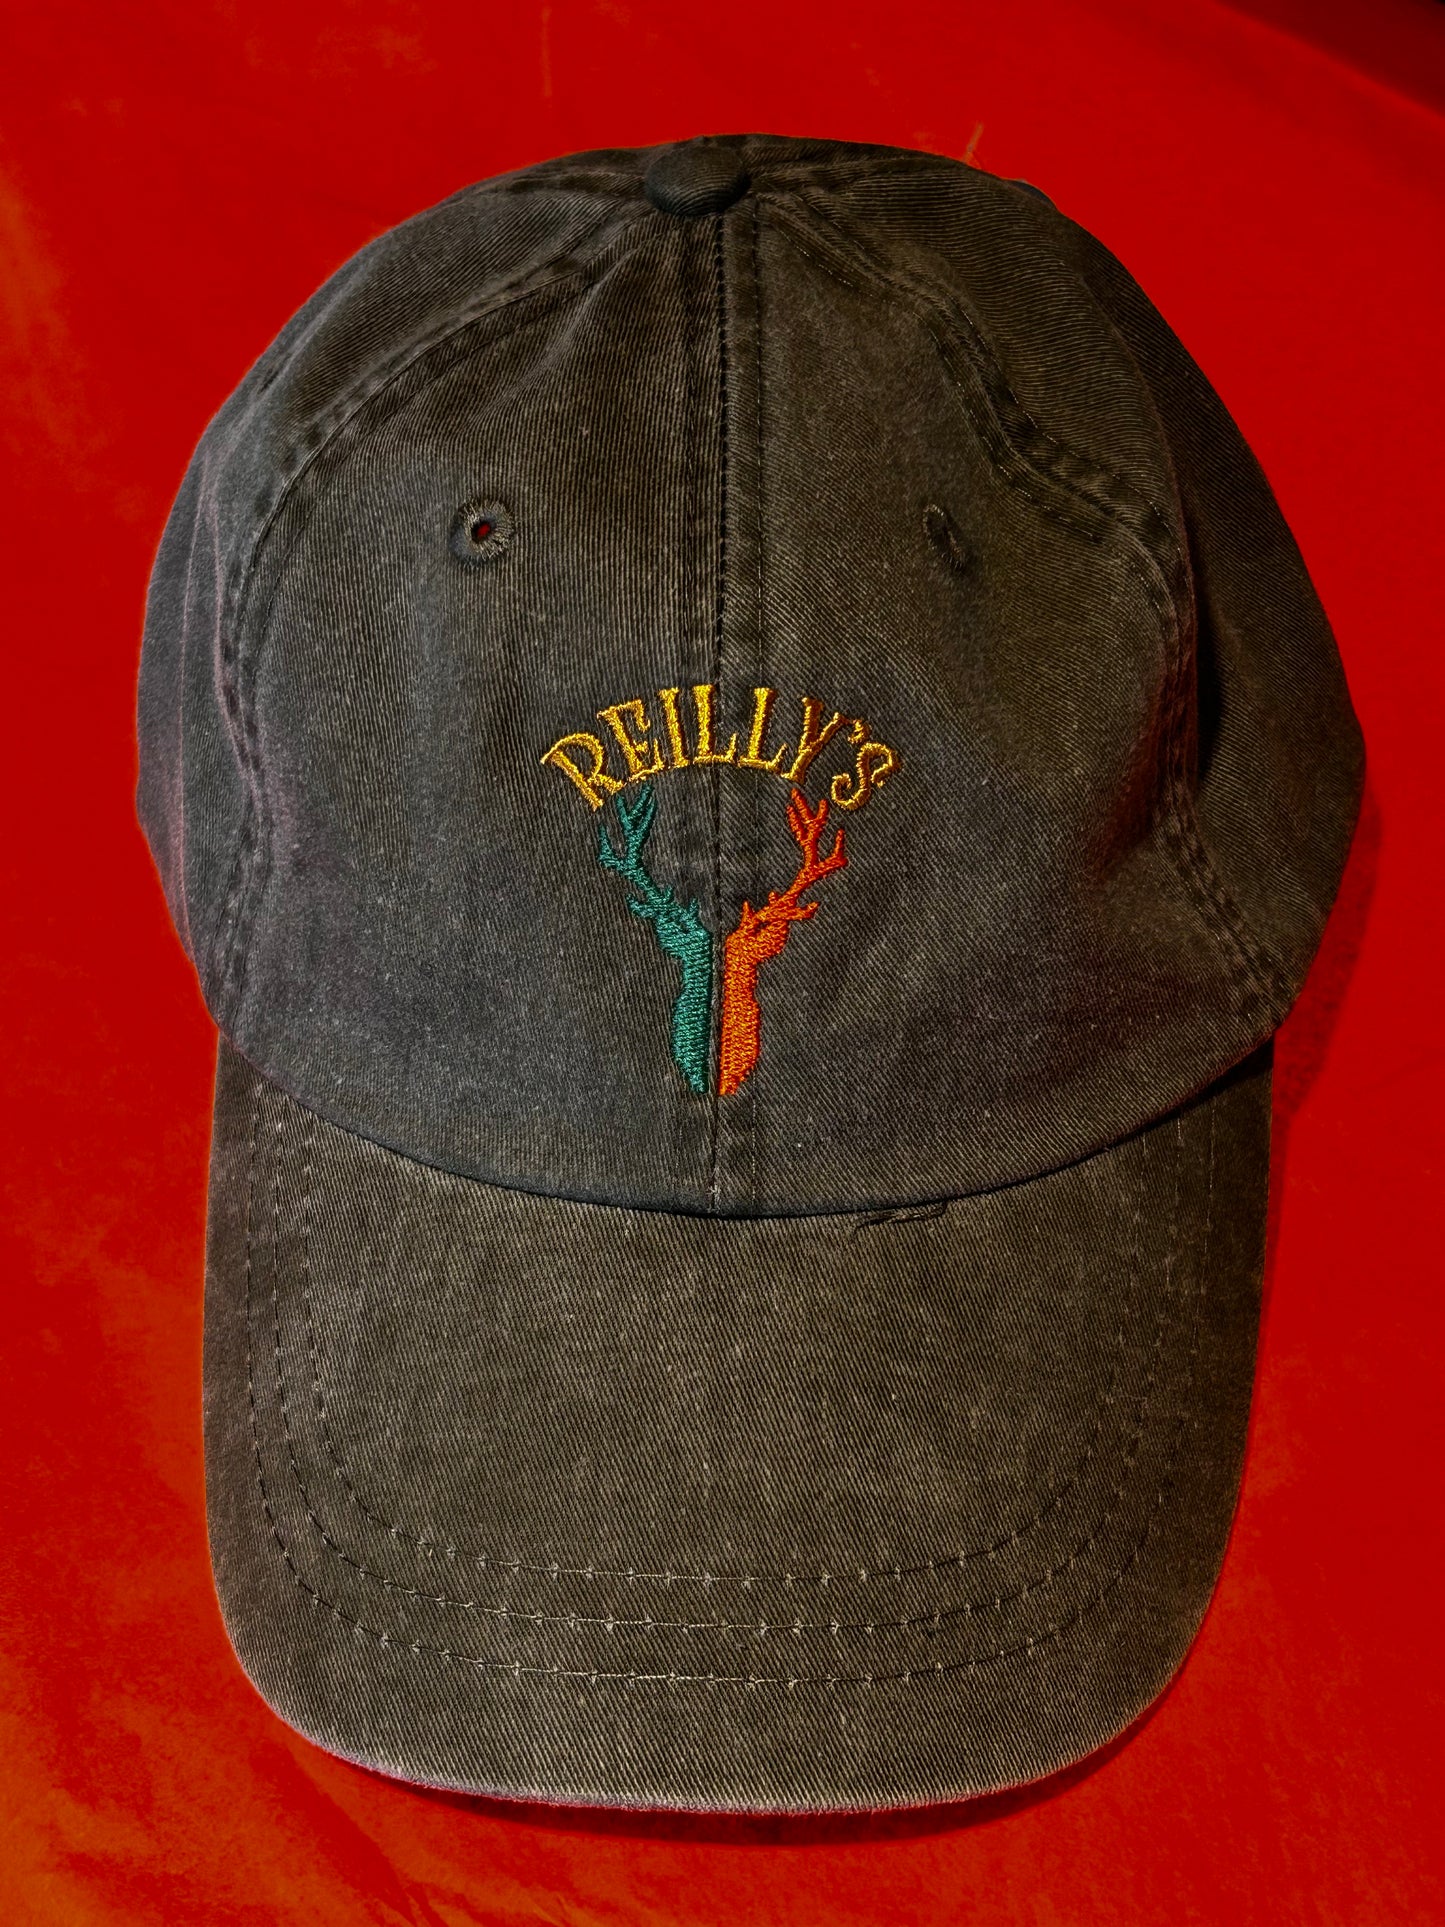 REILLY'S Baseball Hat